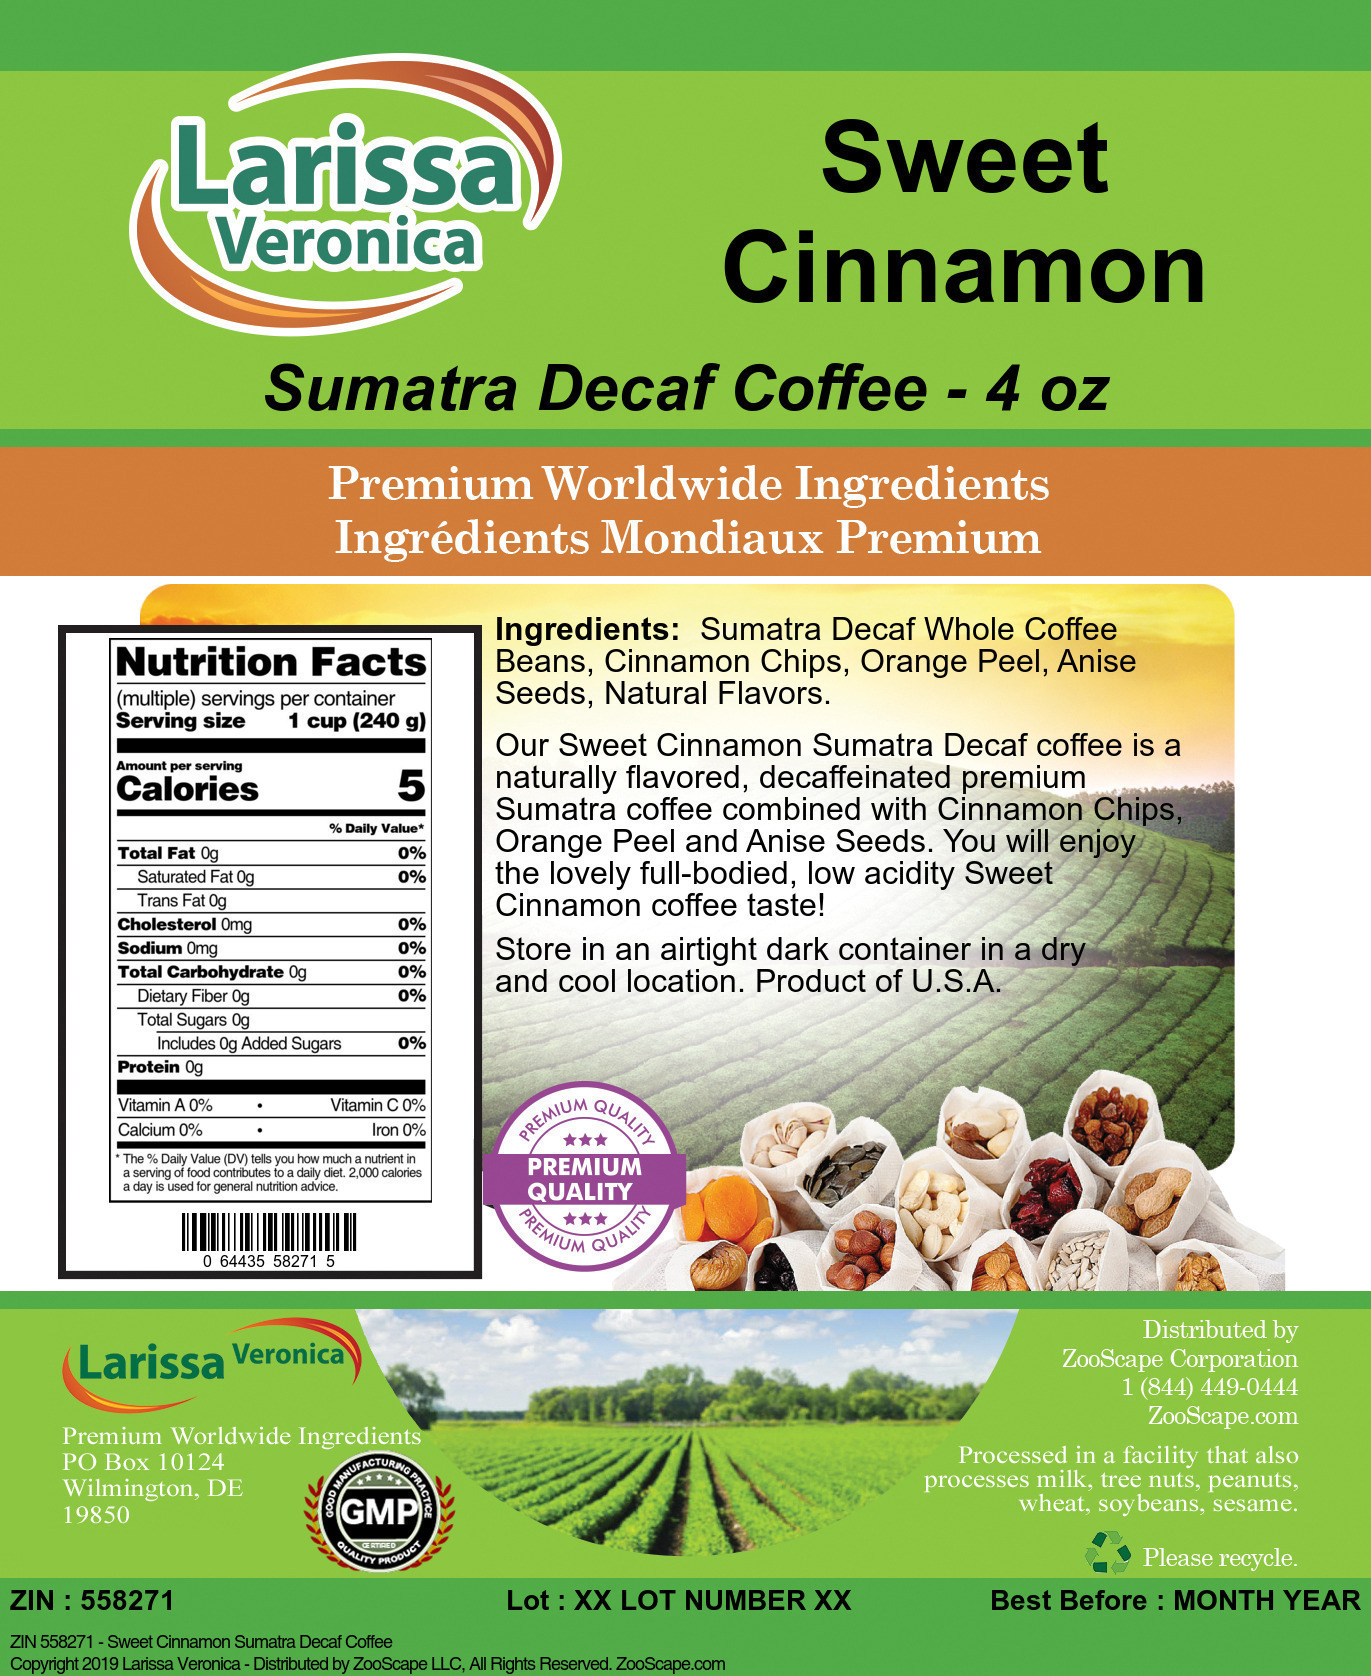 Sweet Cinnamon Sumatra Decaf Coffee - Label